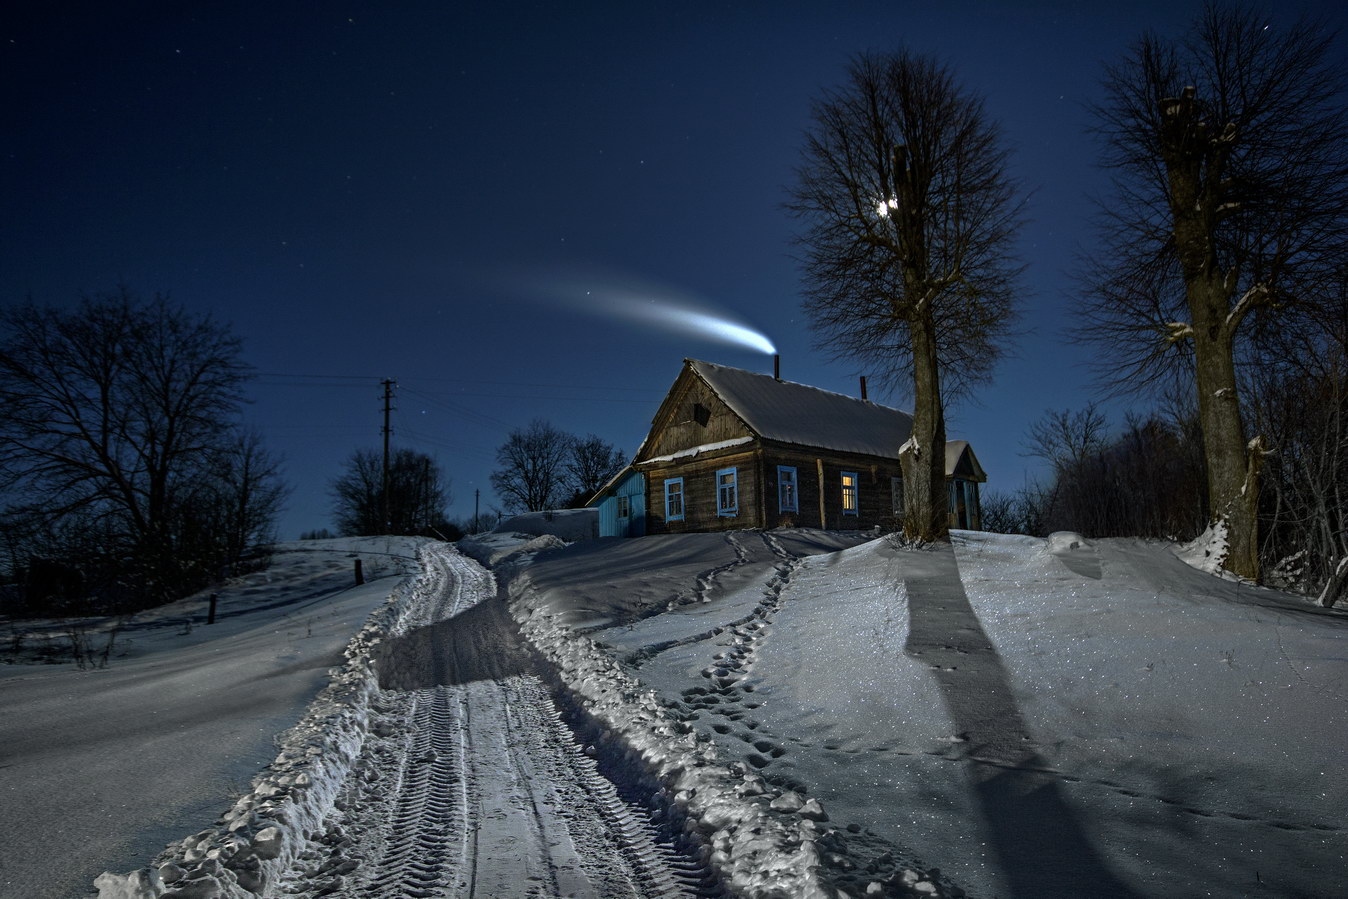 Село мун. Зима в деревне. Зимняя деревня. Деревня зимой ночью. Зимний вечер в деревне.